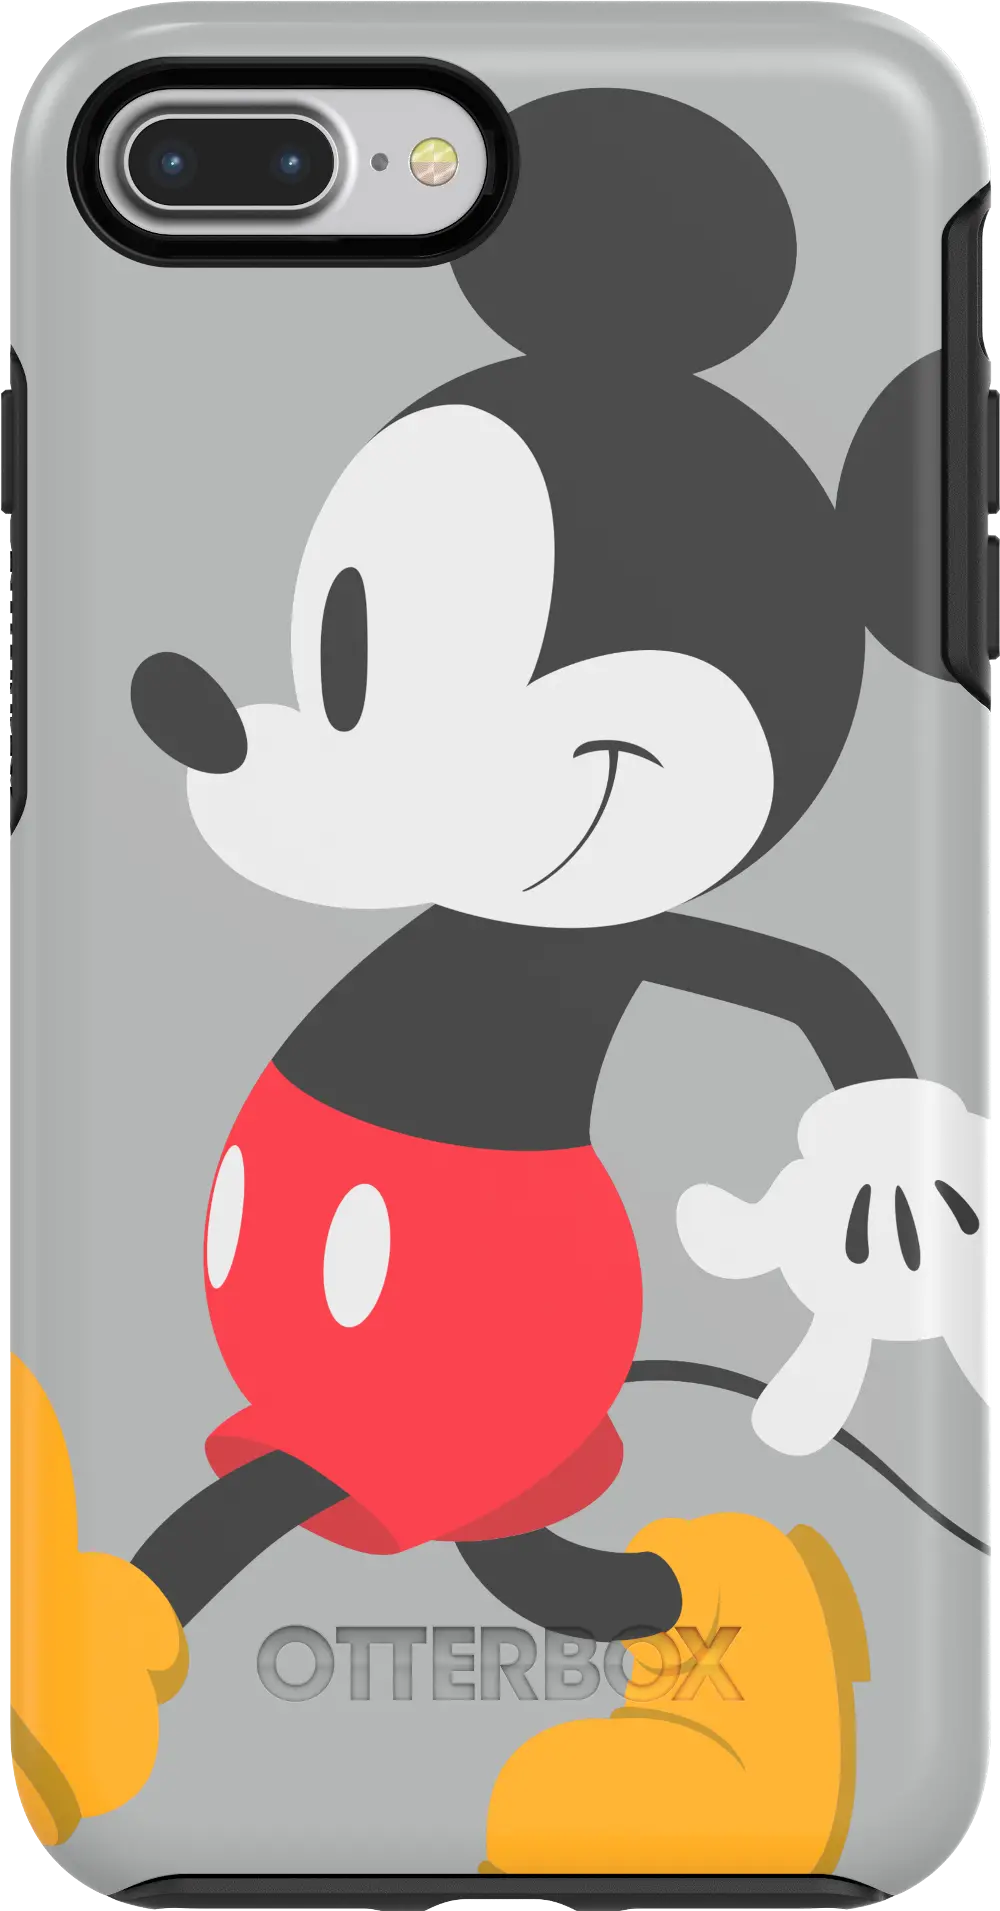 77-57539,S-IP8P-MM OtterBox Mickey iPhone 7 Plus / iPhone 8 Plus Case-1